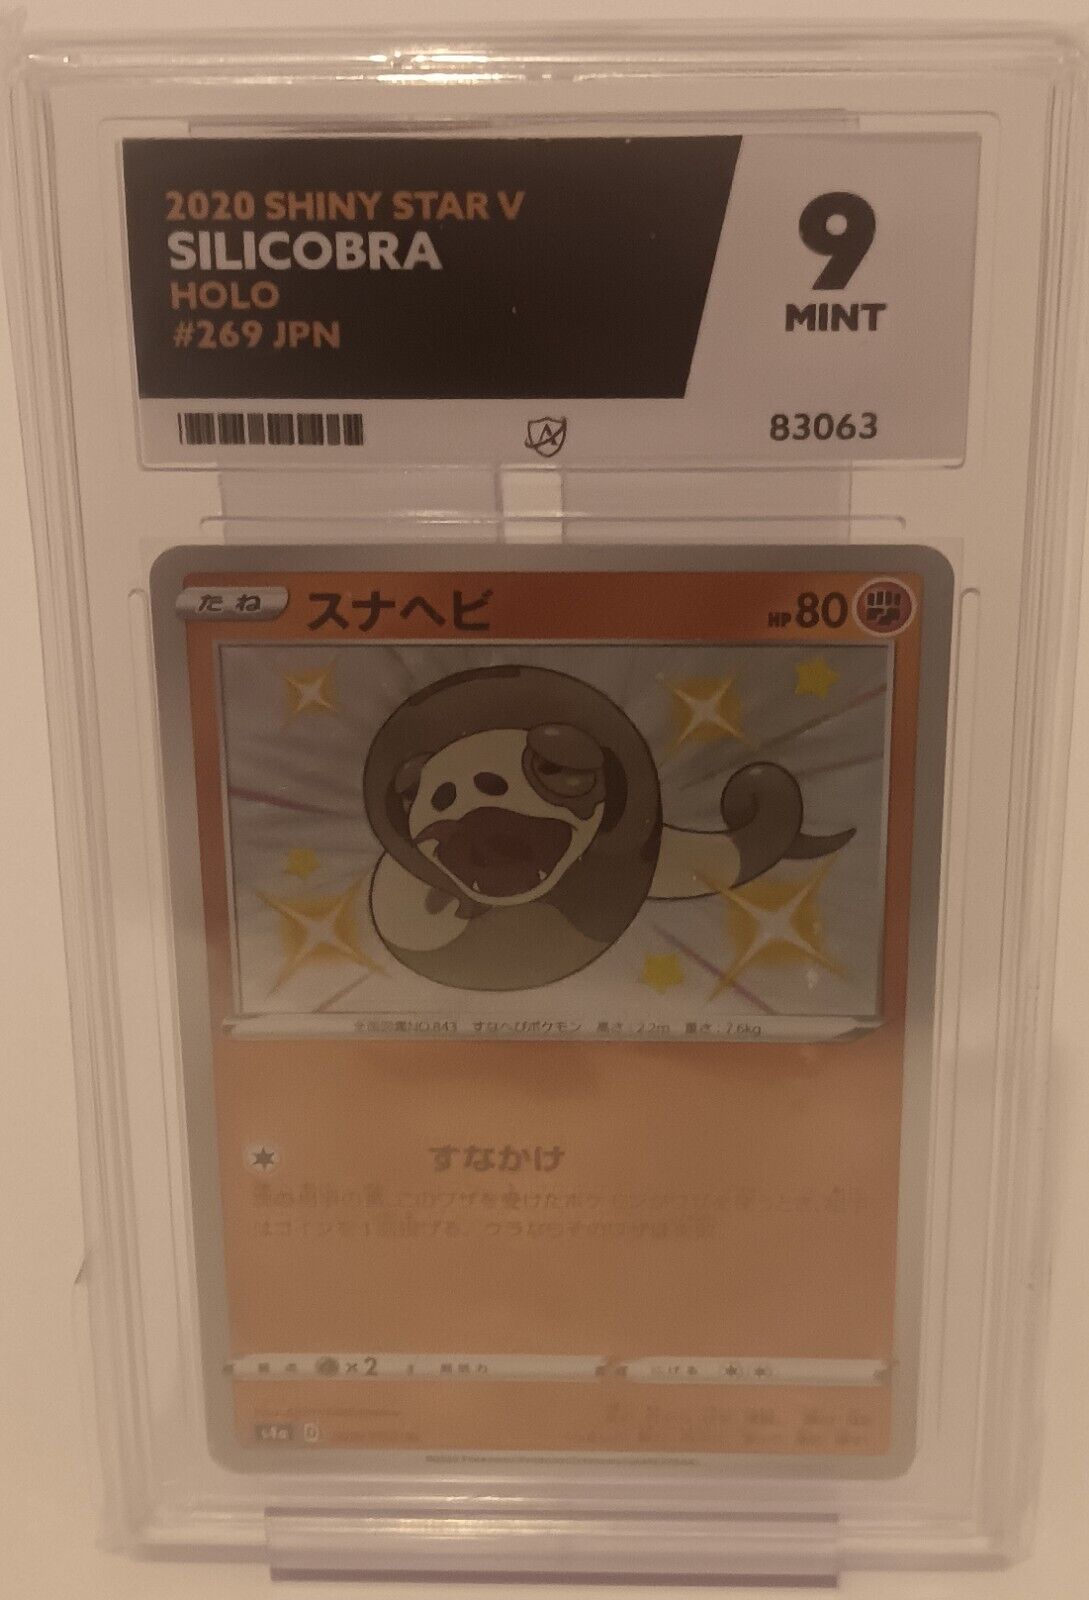 Silicobra Shiny Star V Holo Pokemon Card Graded